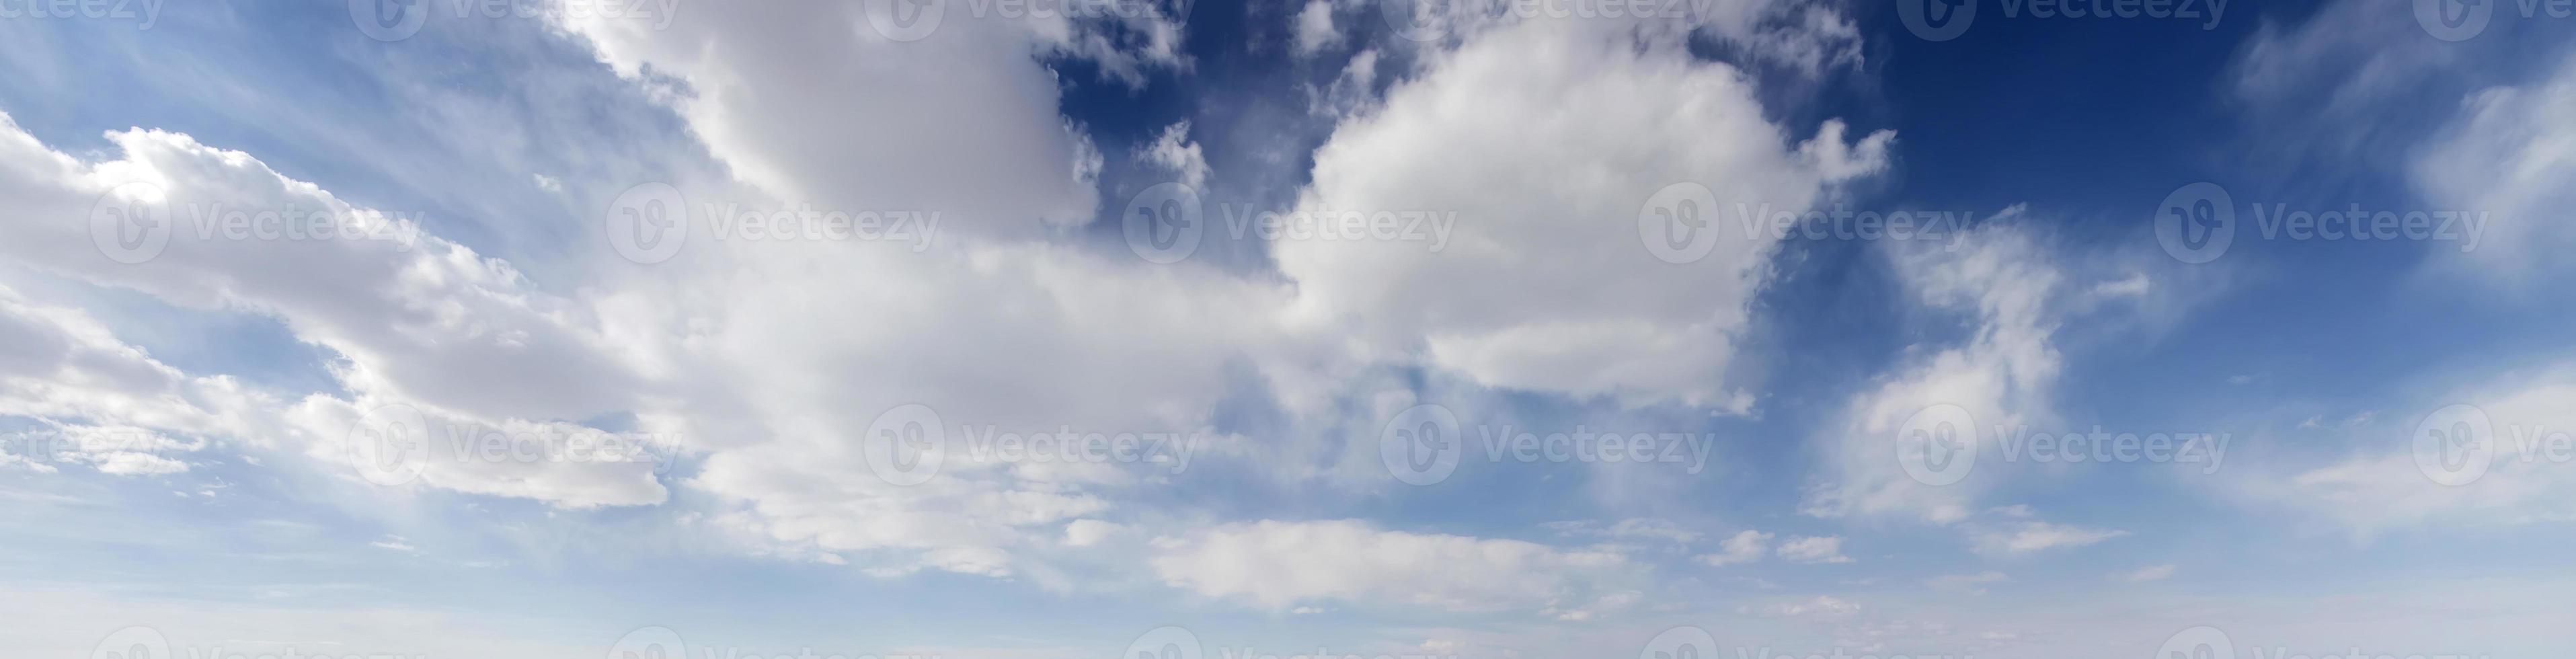 prachtige cloudscape in de lucht foto